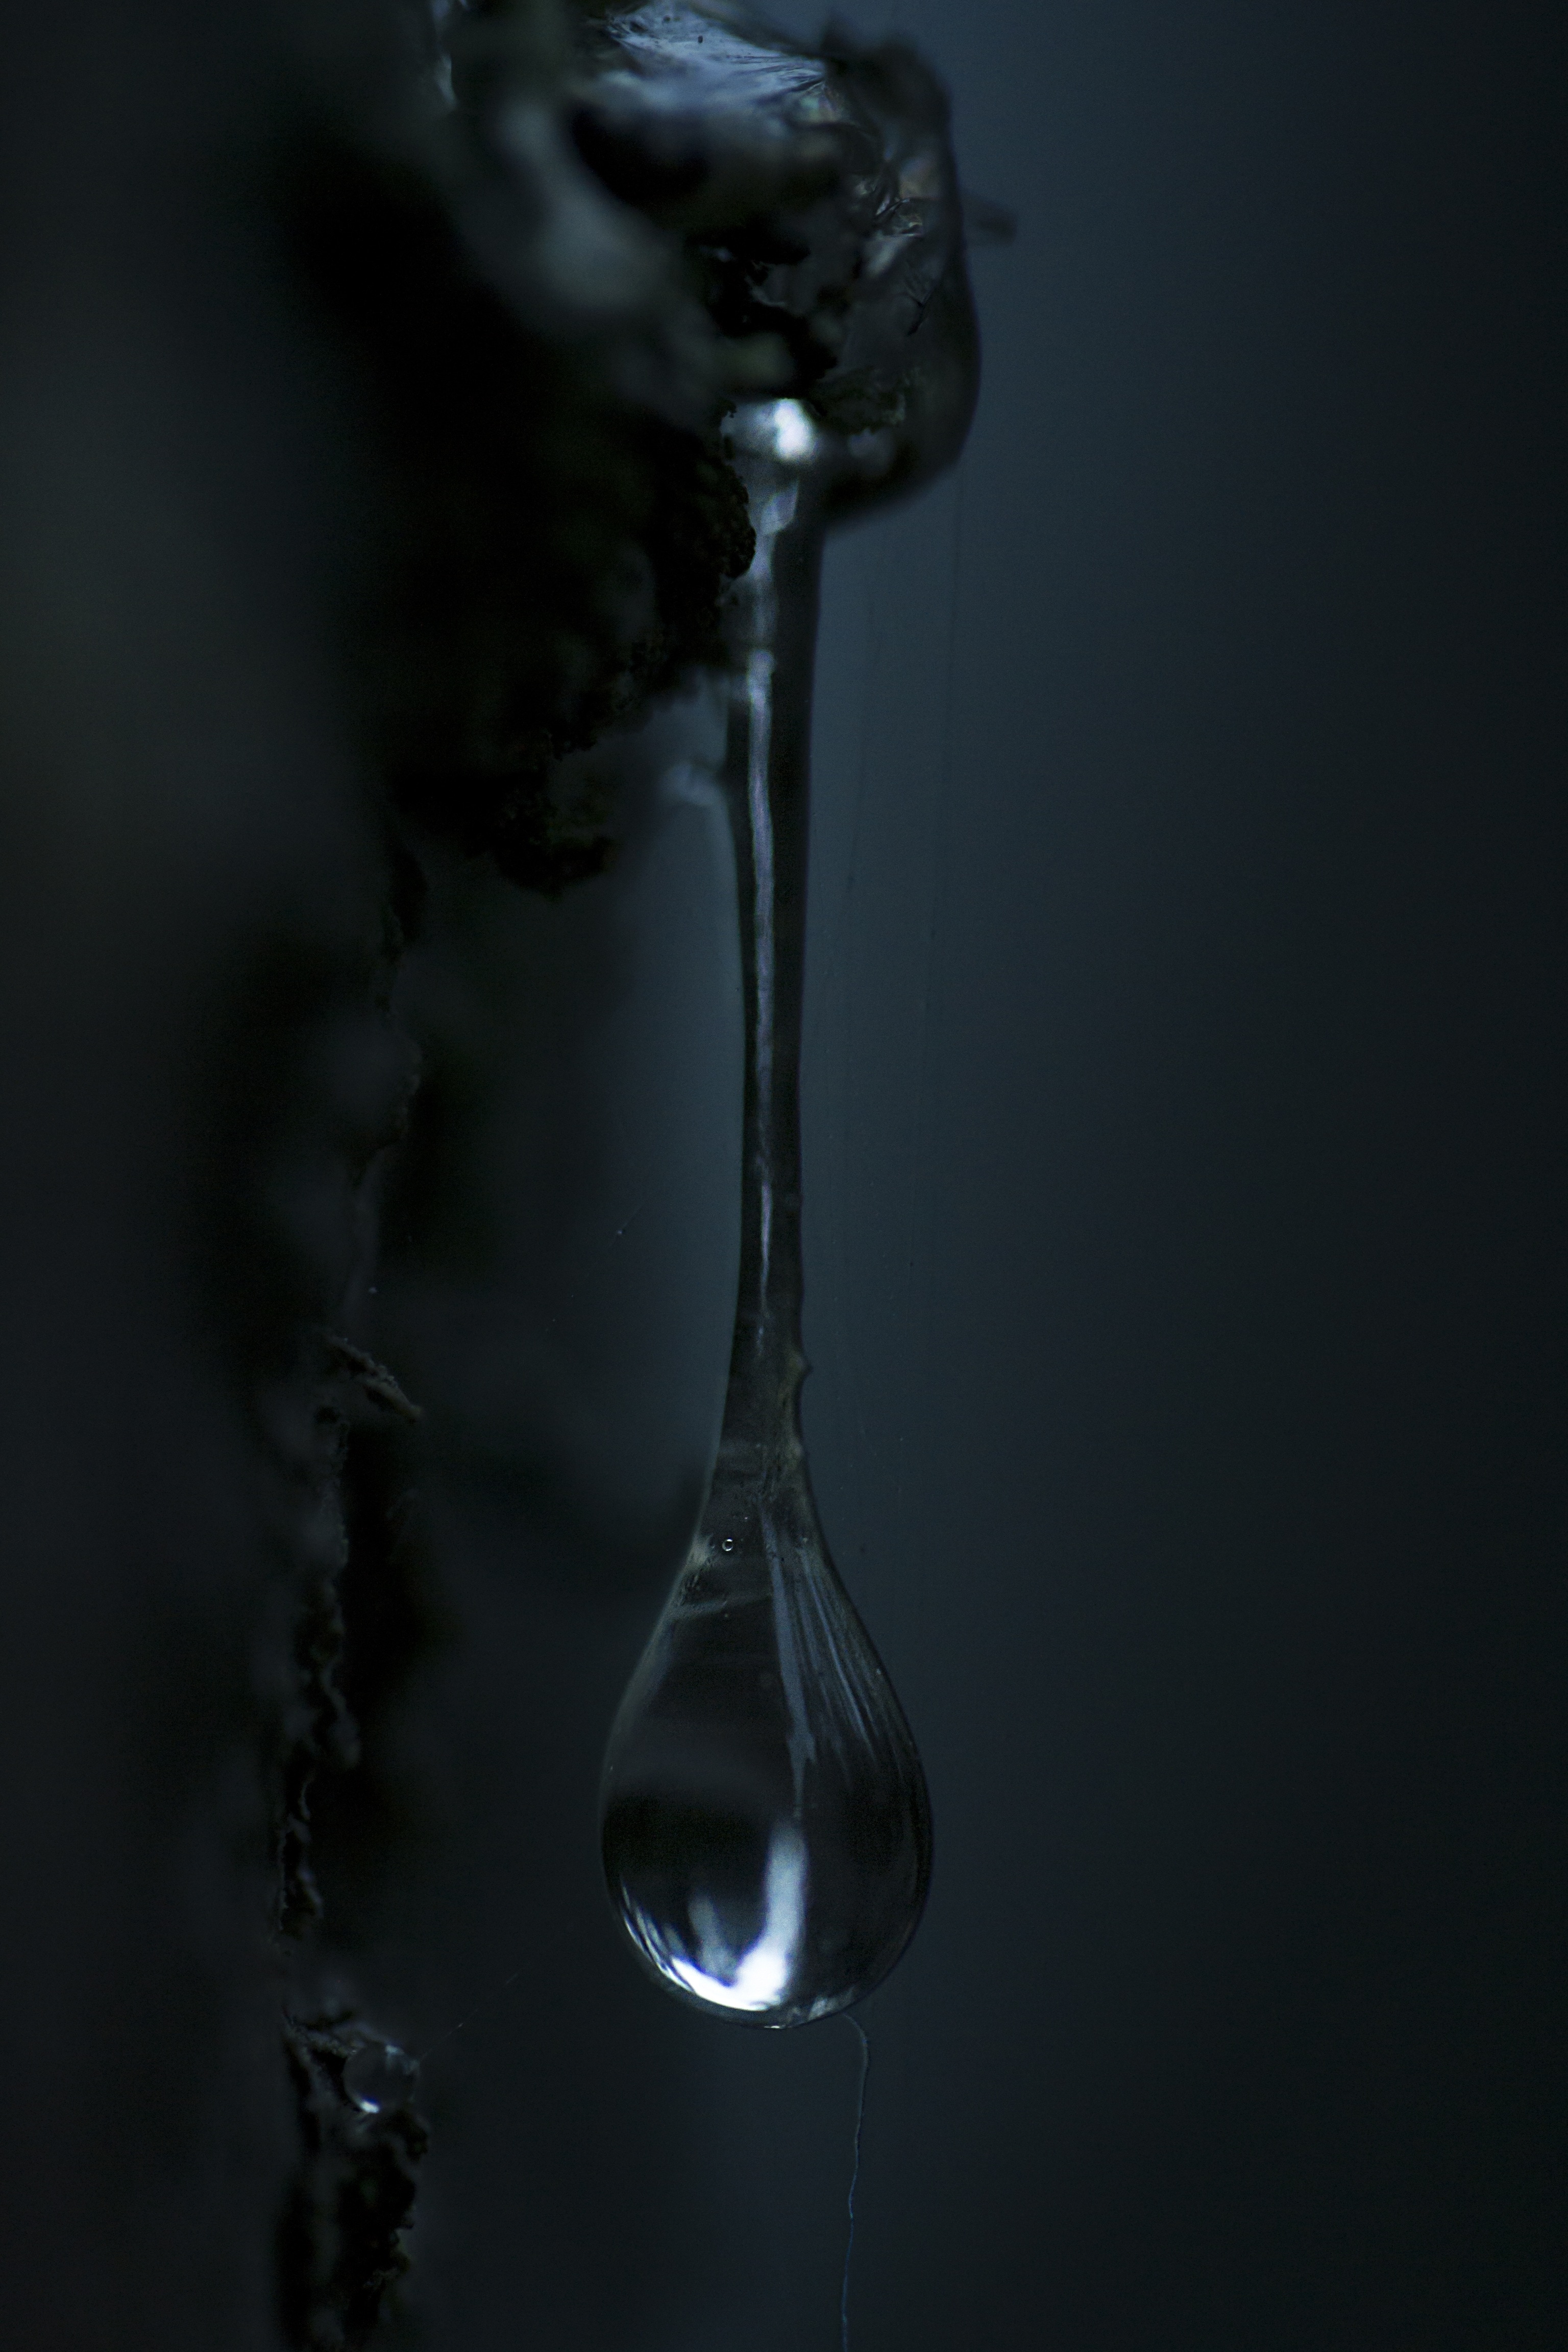 Water Drops , HD Wallpaper & Backgrounds